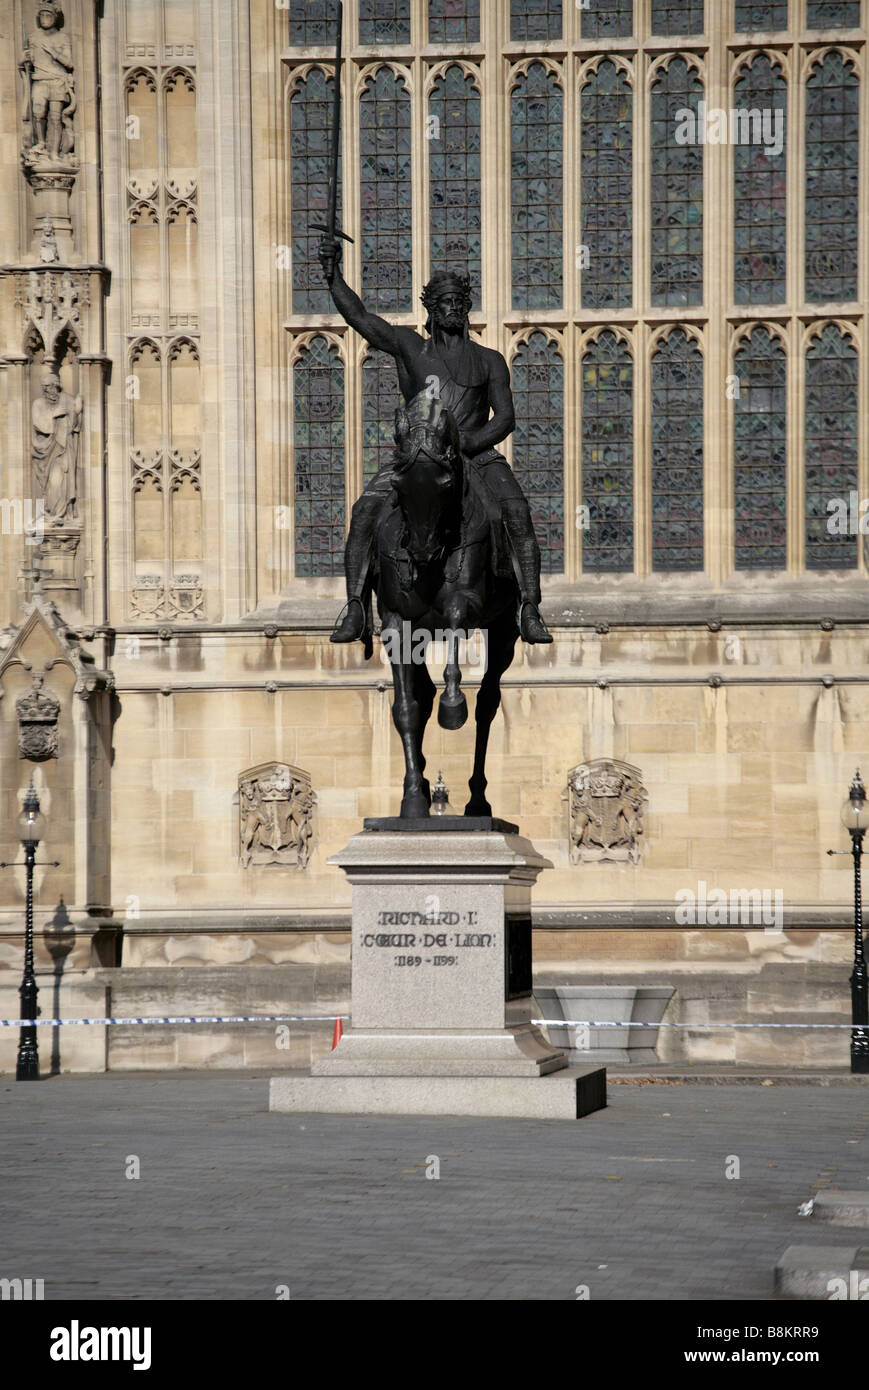 RICHARD il cuore di leone statua Londra Inghilterra WESTMINISTER Londra Inghilterra 21 Ottobre 2007 Foto Stock